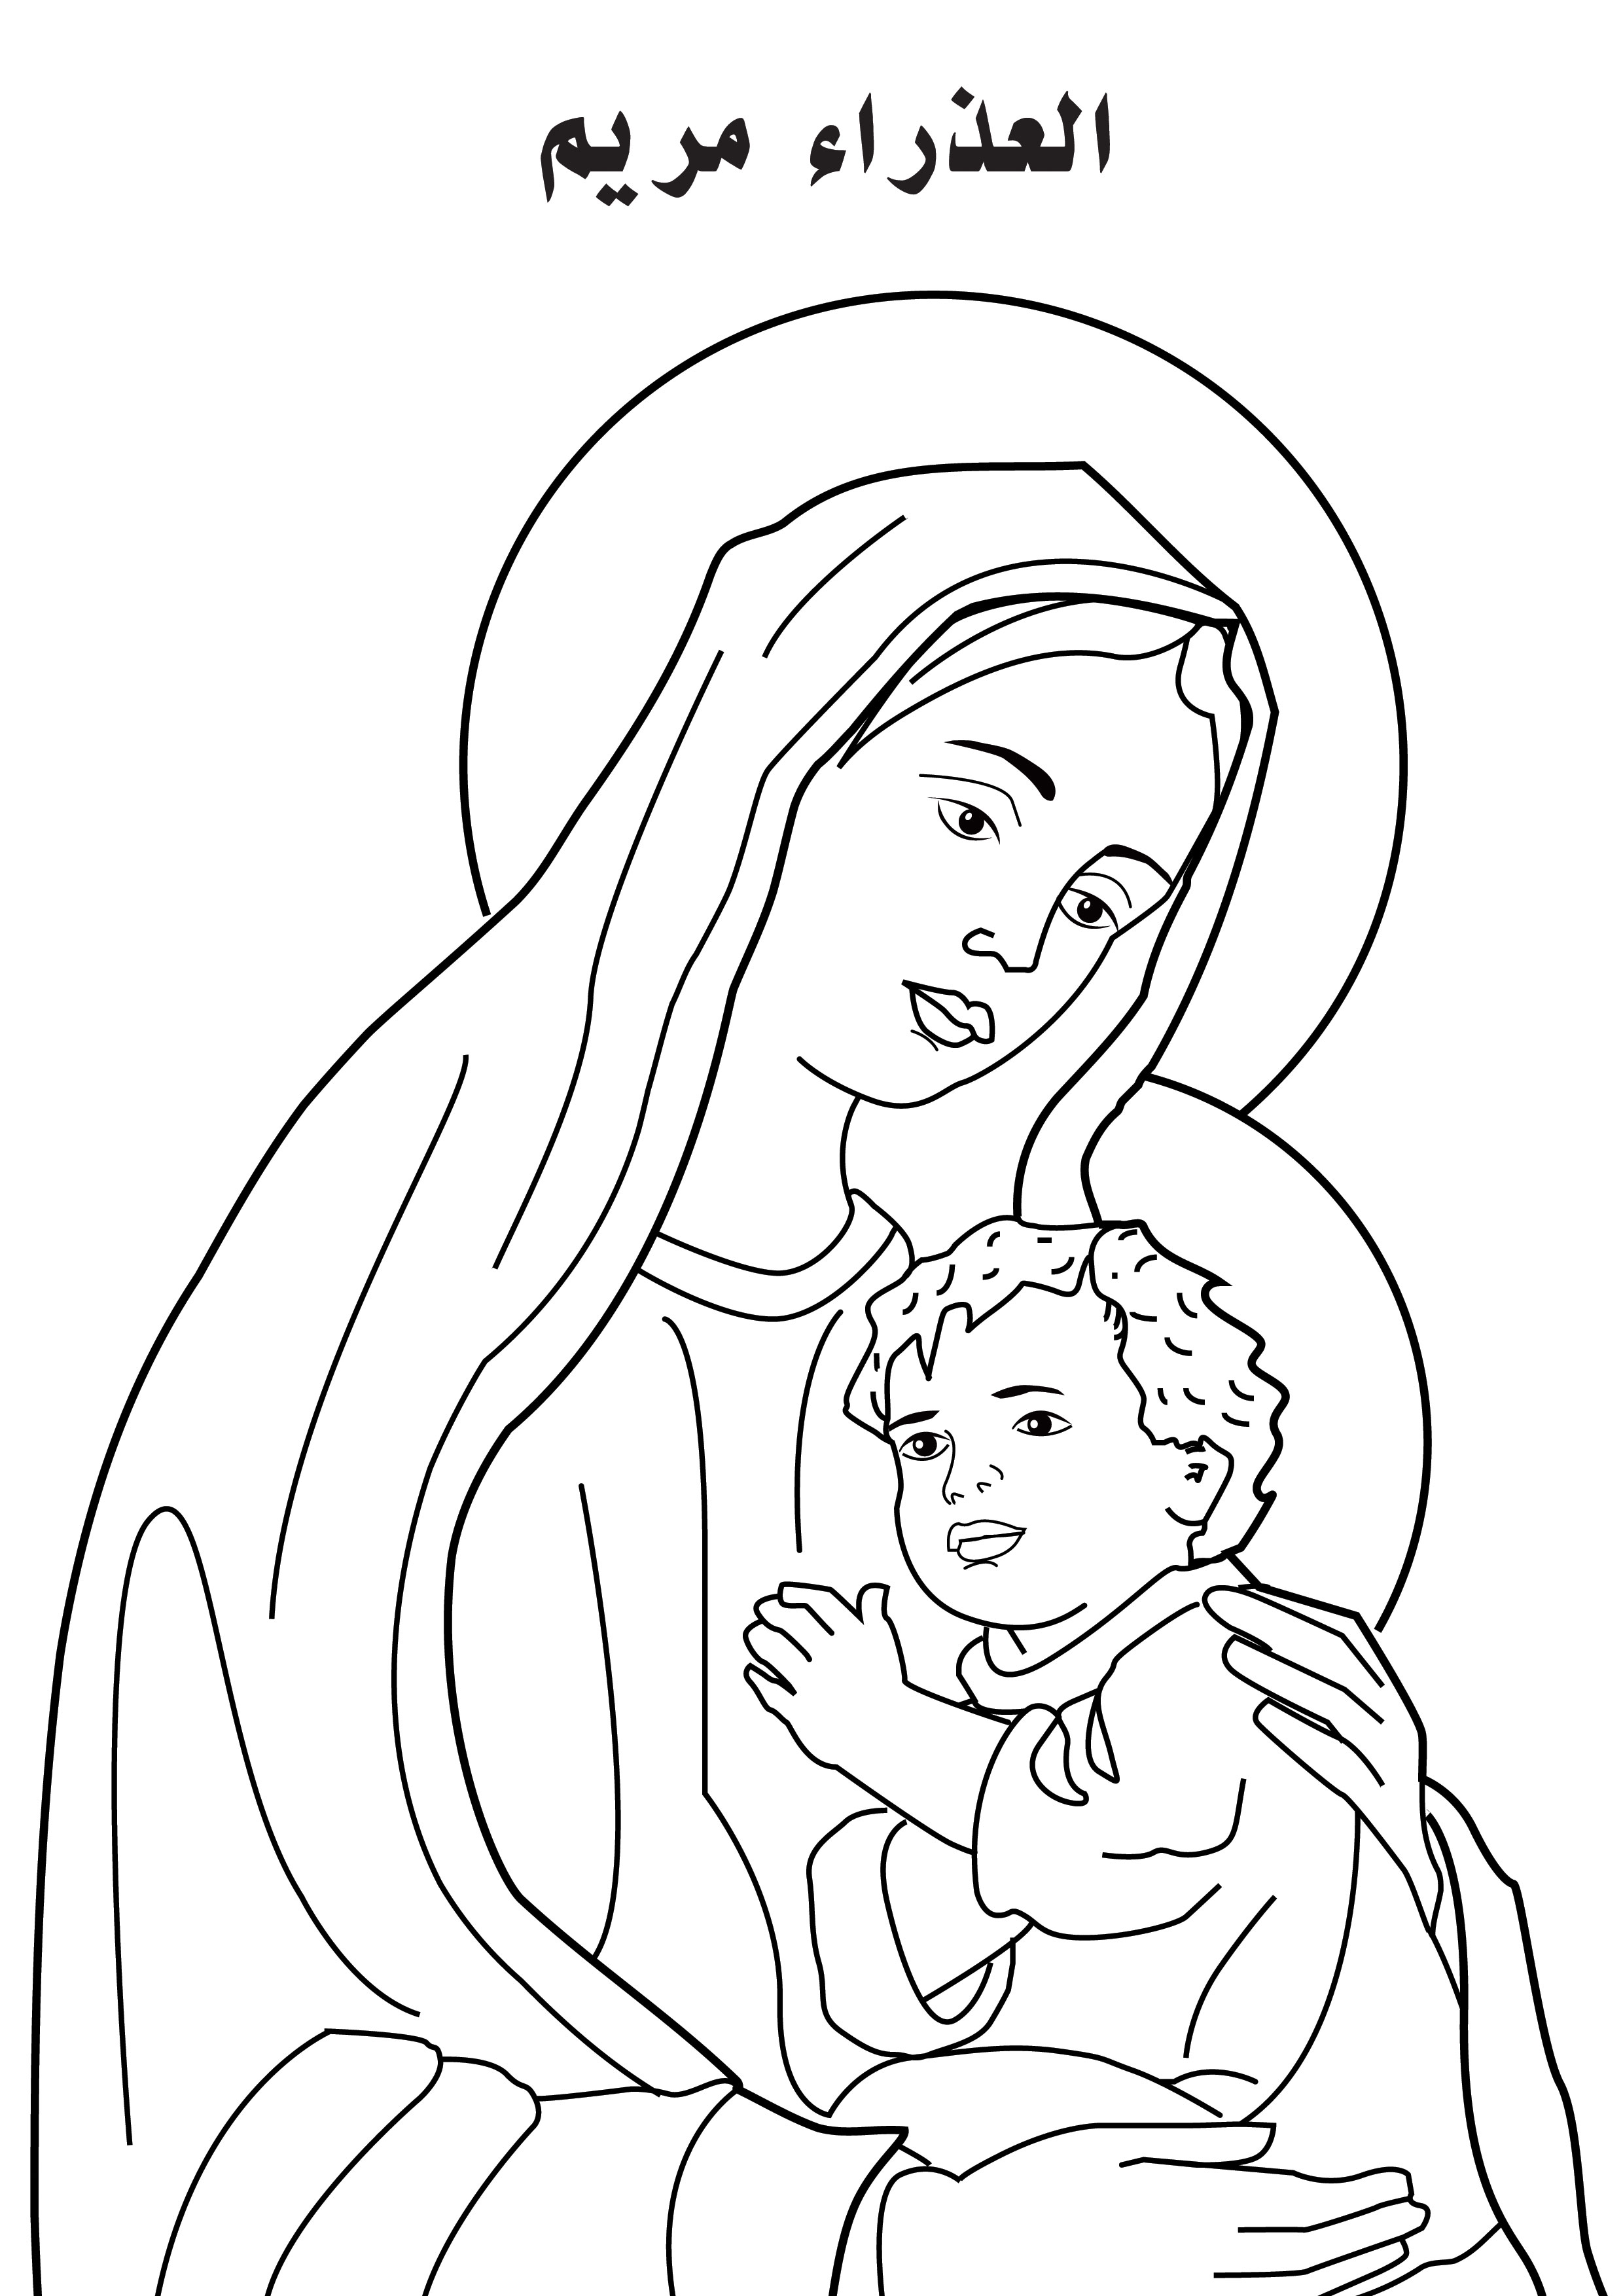 Virgin Mary Coloring Page at Free printable